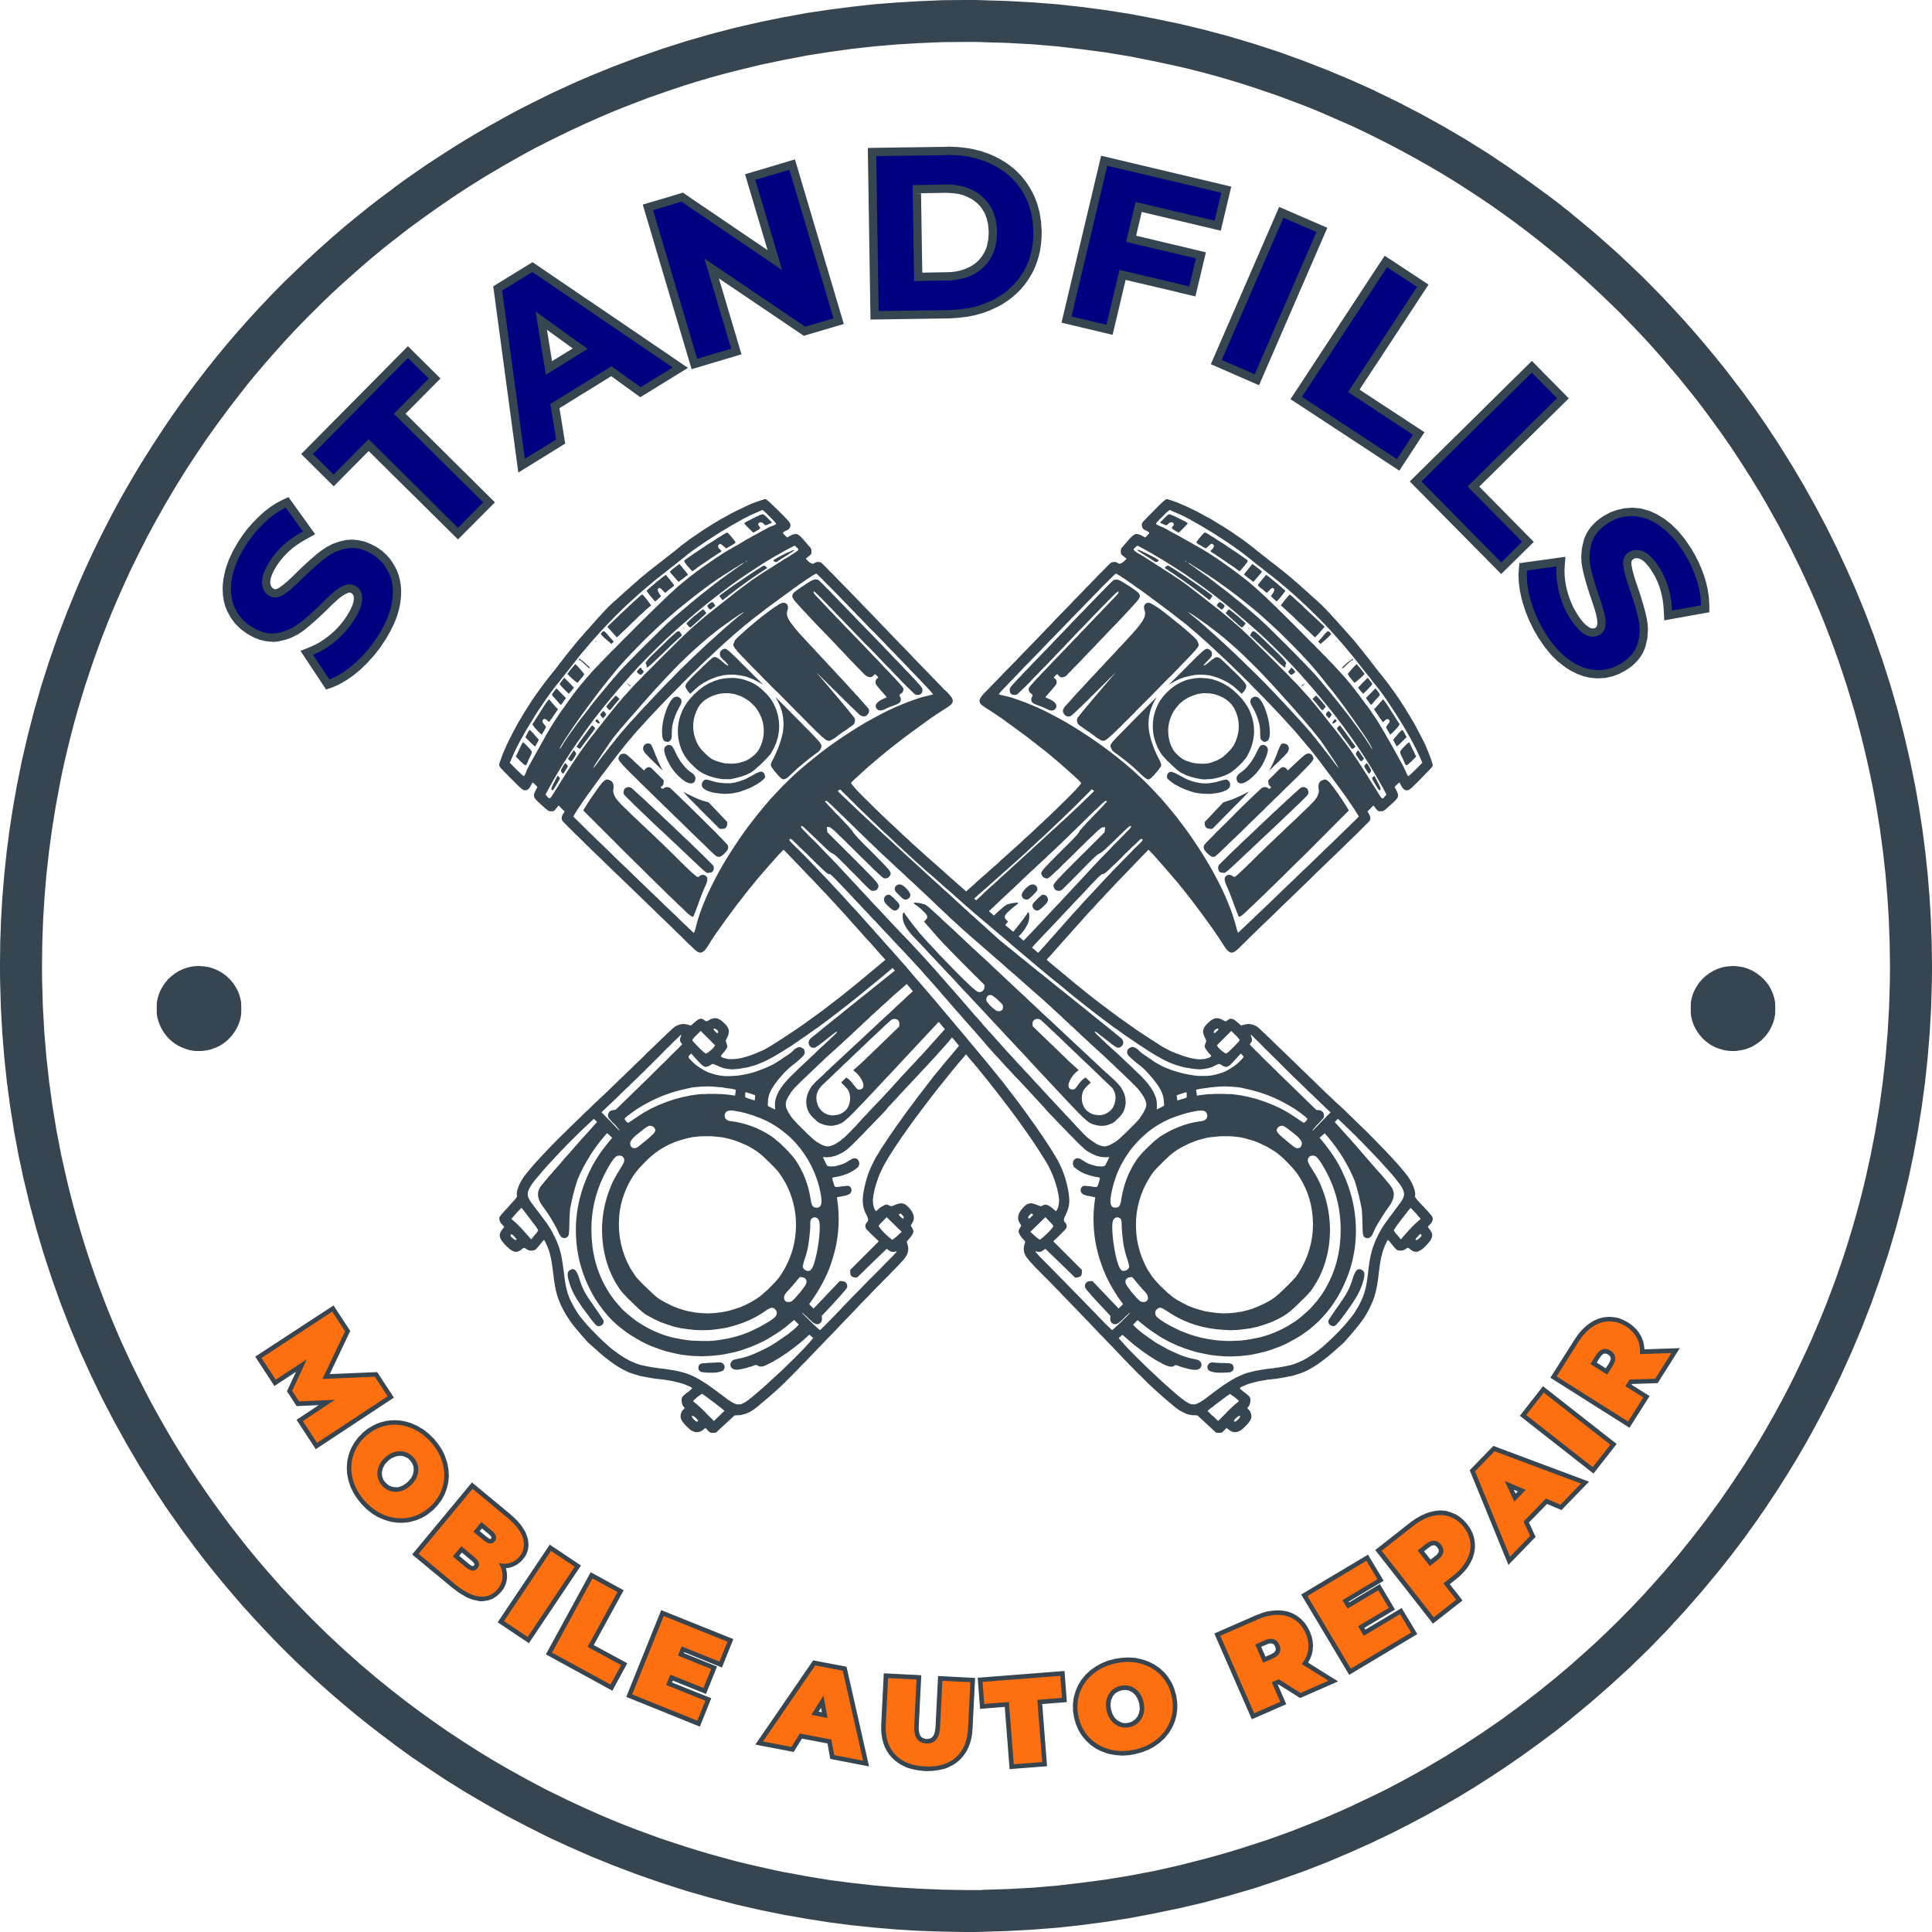 standfillsautorepair.com Logo